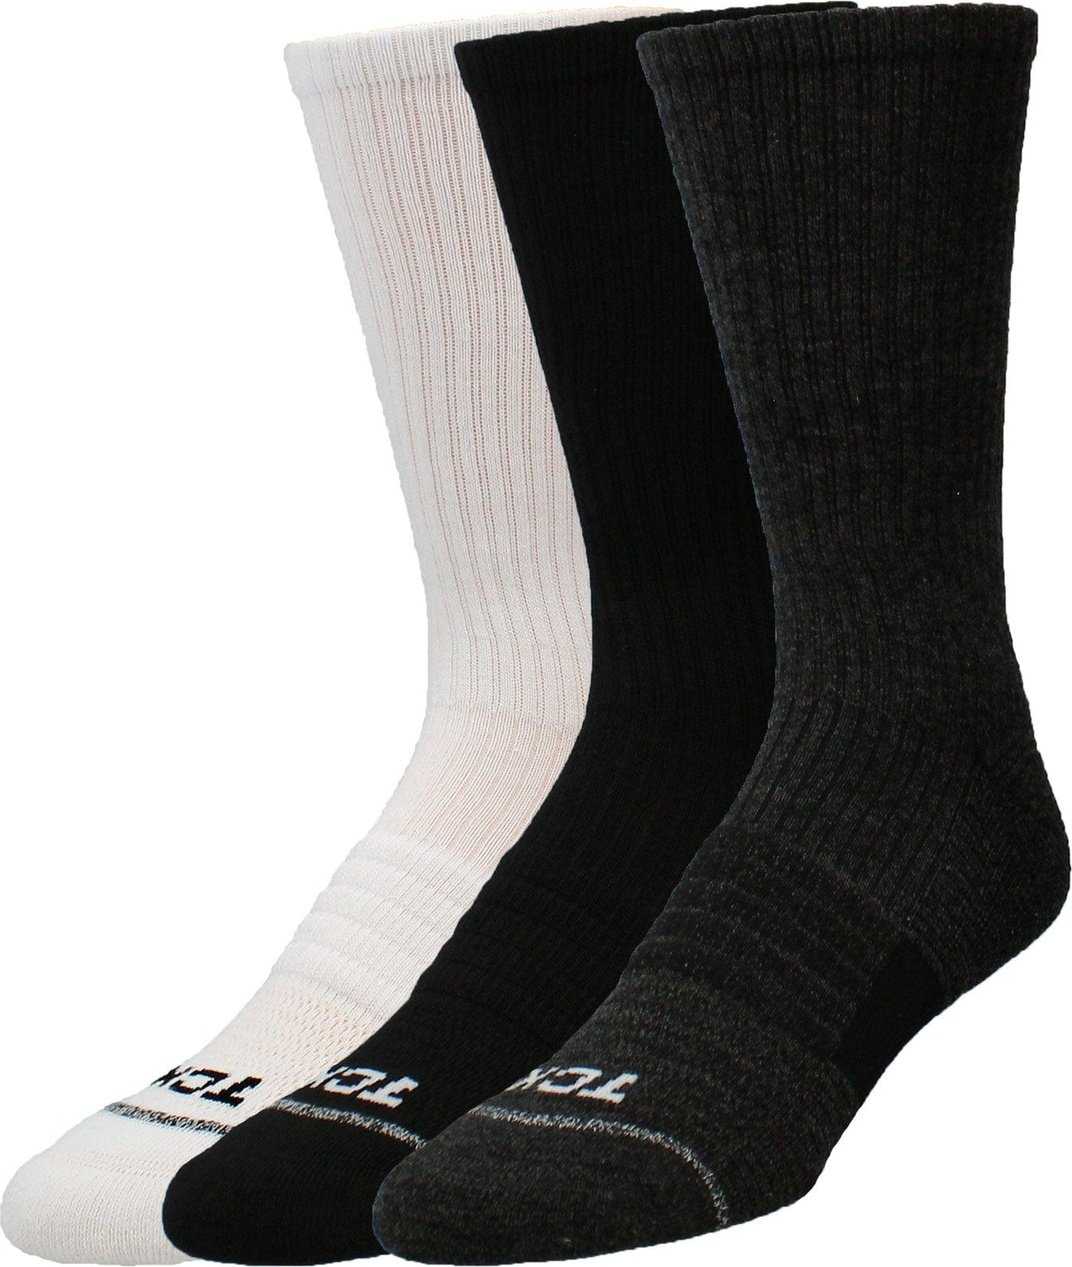 TCK Repreve Crew Socks 3 pk, 1 pair of each color - Black Graphite White - HIT a Double - 1